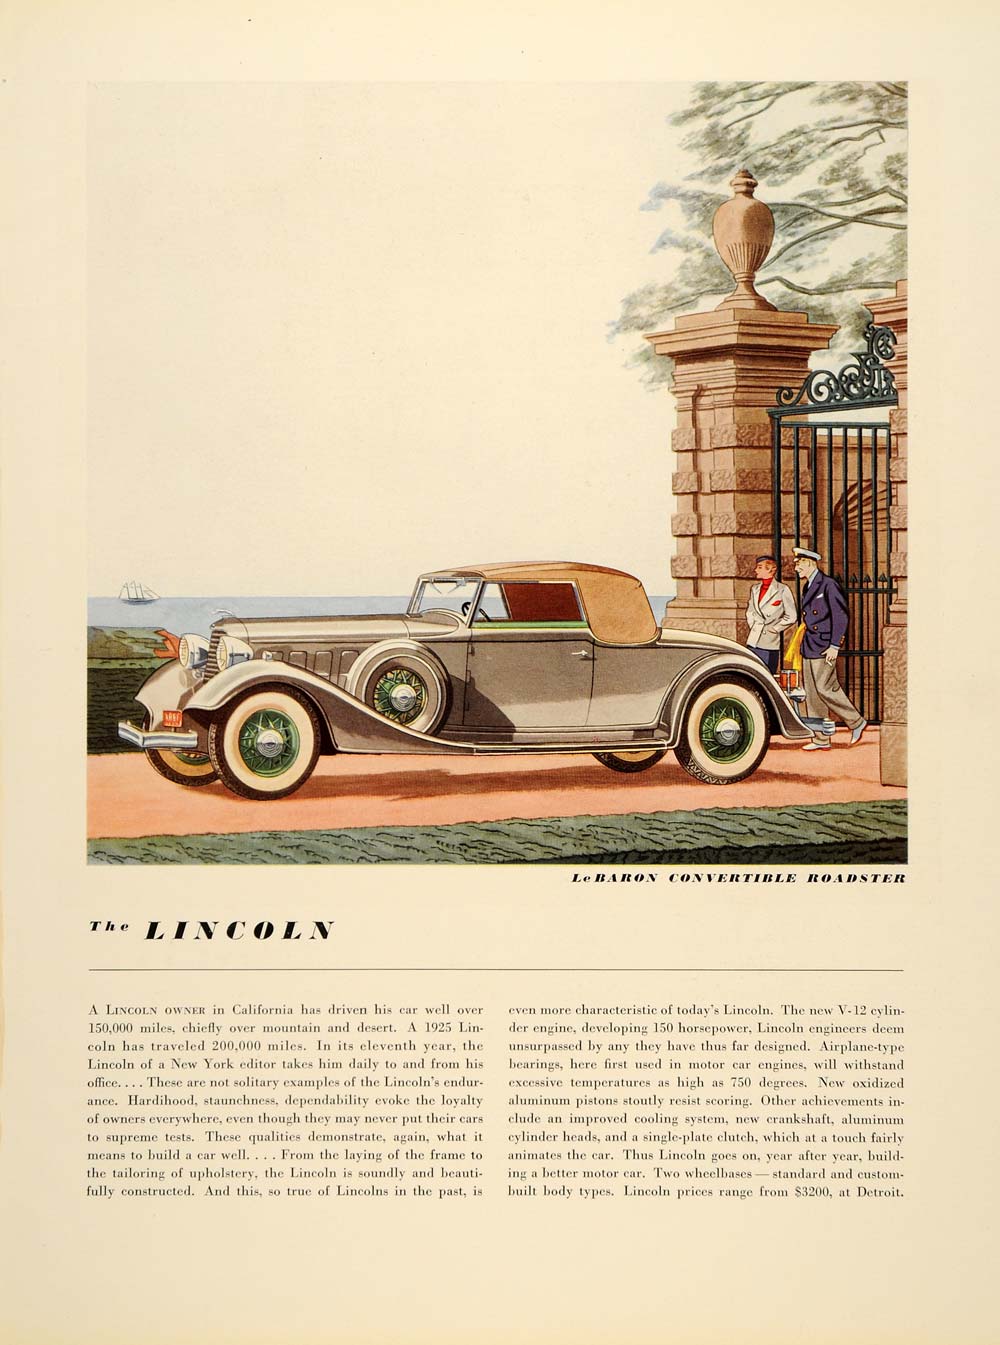 1934 Ad Vintage Lincoln LeBaron Convertible Roadster - ORIGINAL ADVERTISING FTT9